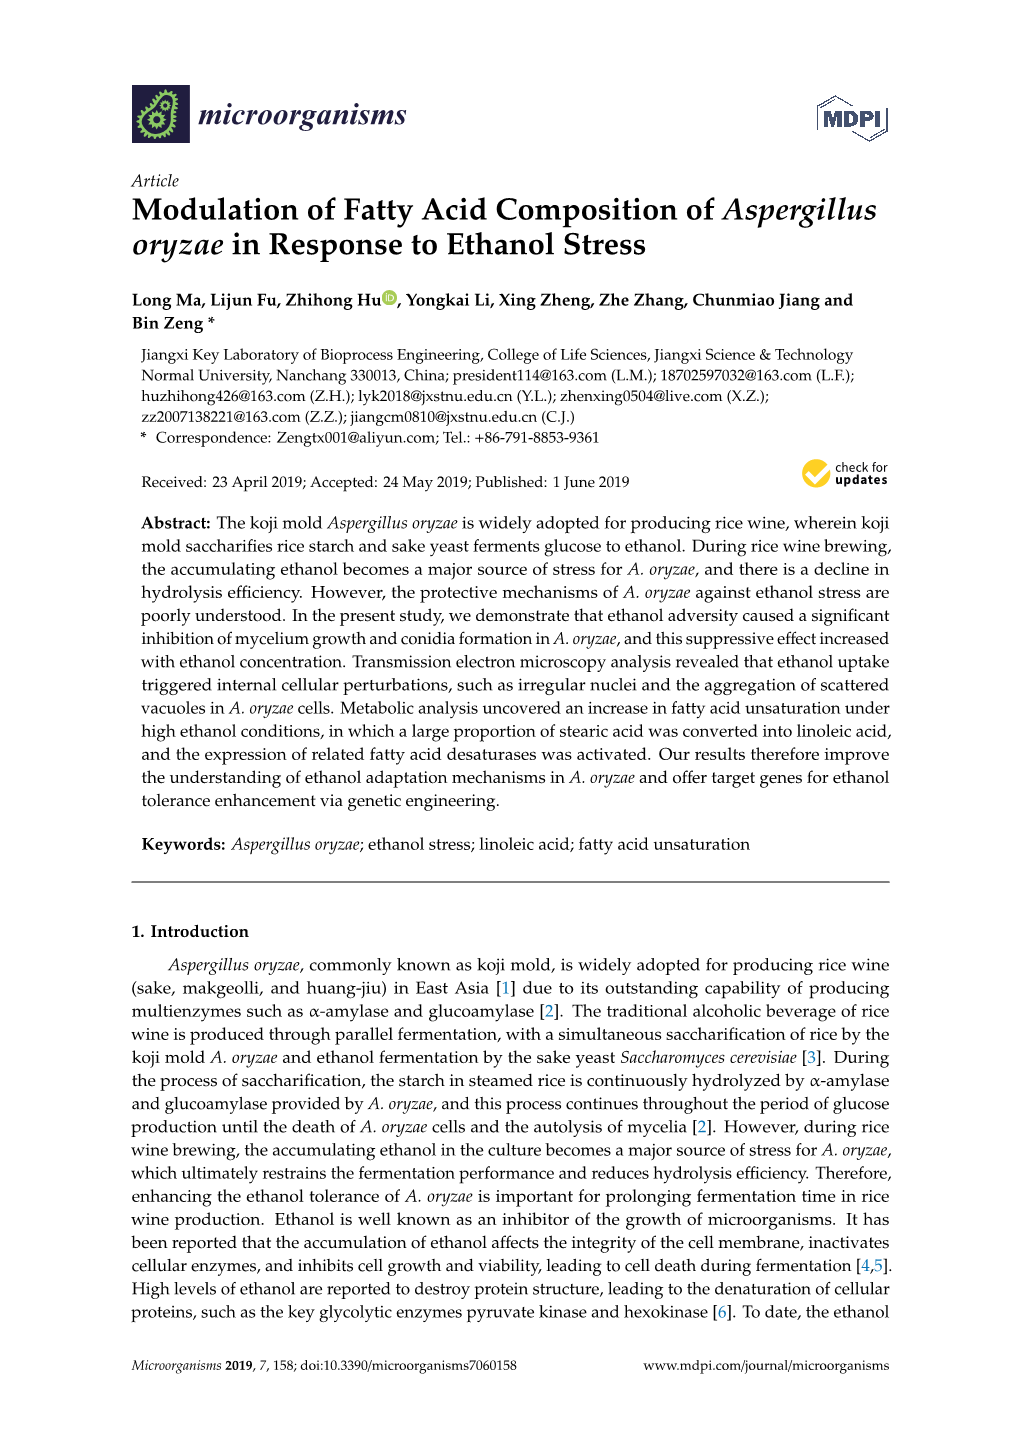 Modulation of Fatty Acid Composition of Aspergillus Oryzae in Response to Ethanol Stress